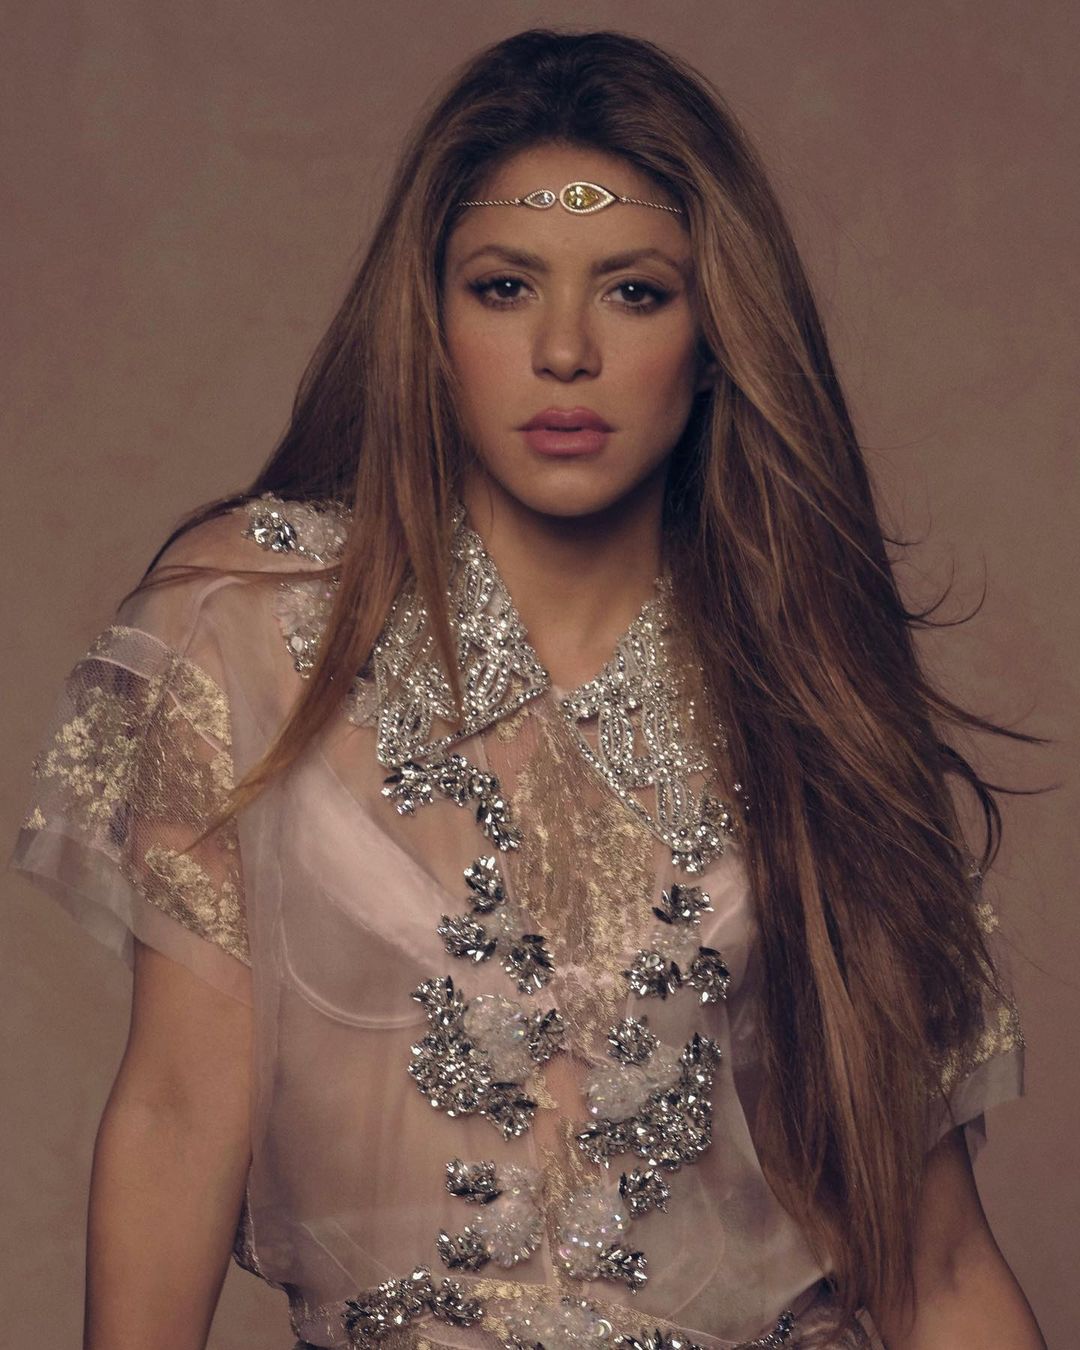 Shakira 15 фигура, волосы, тело, грудь, ноги, руки